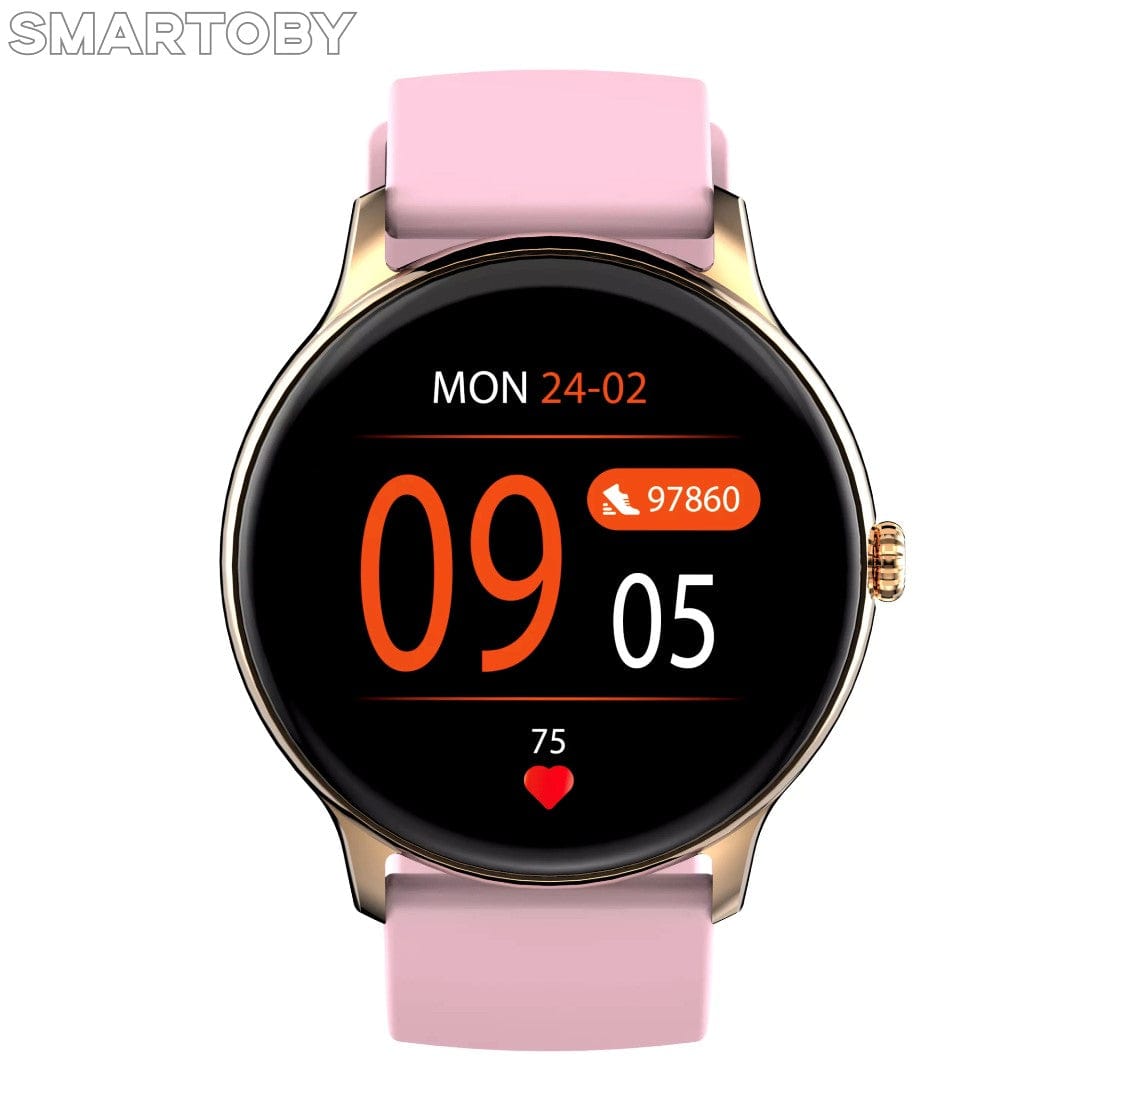 Smart Watch South Africa  Watches Black Smartoby Dafit i10 BT Call Smart Watch Black